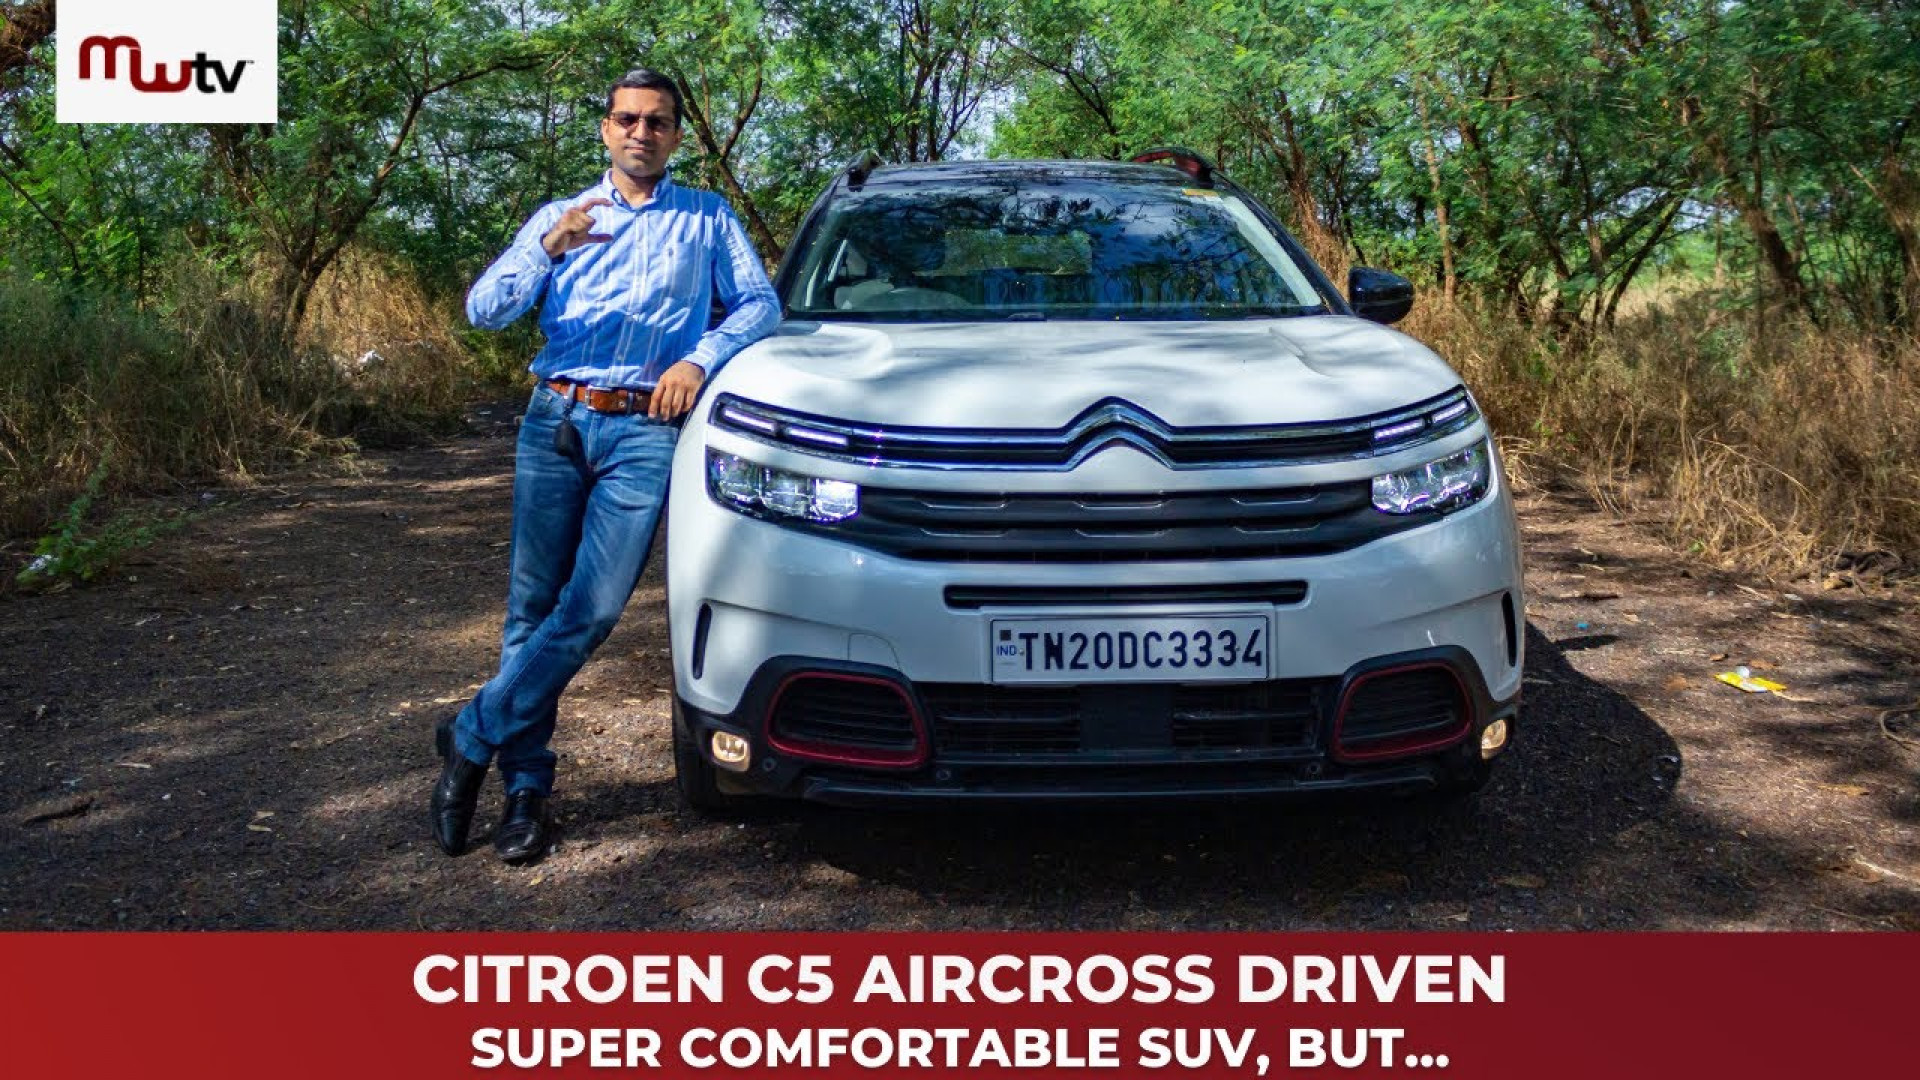  Car Reviews - Citroën C5 Aircross C-Series, the